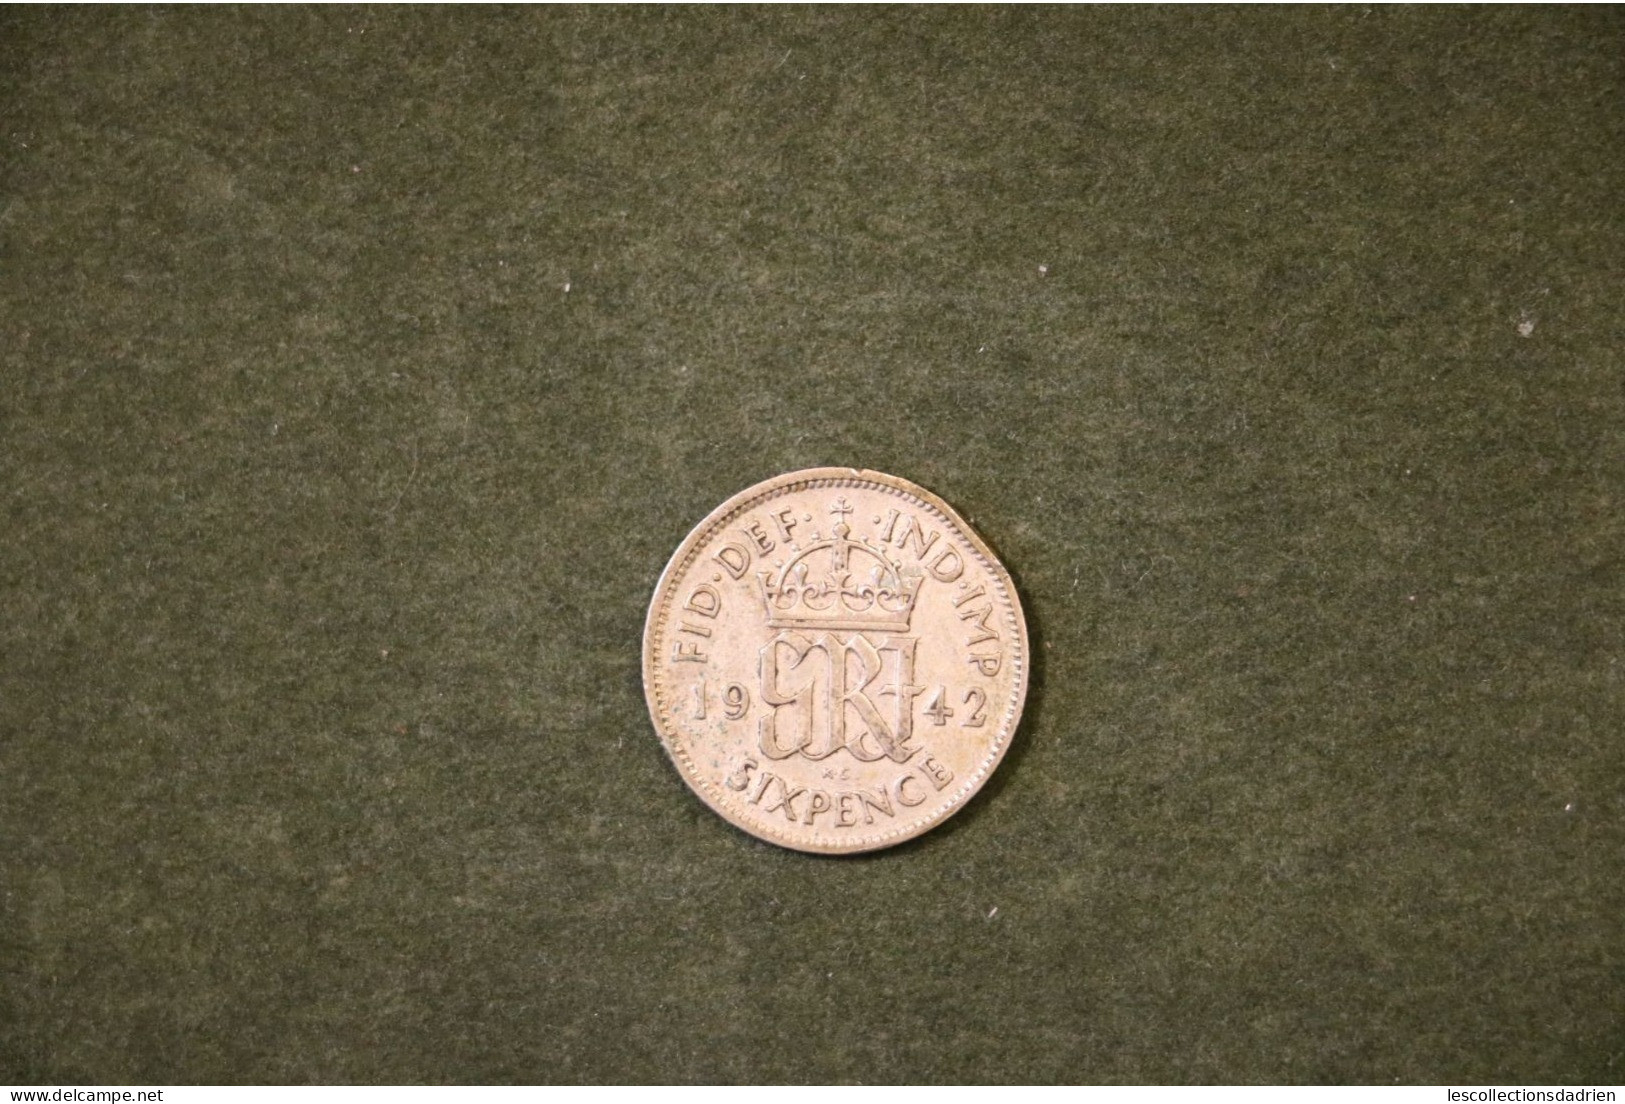 Pièce En Argent Grande-Bretagne 6 Pences 1942  - UK Silver Coin - H. 6 Pence